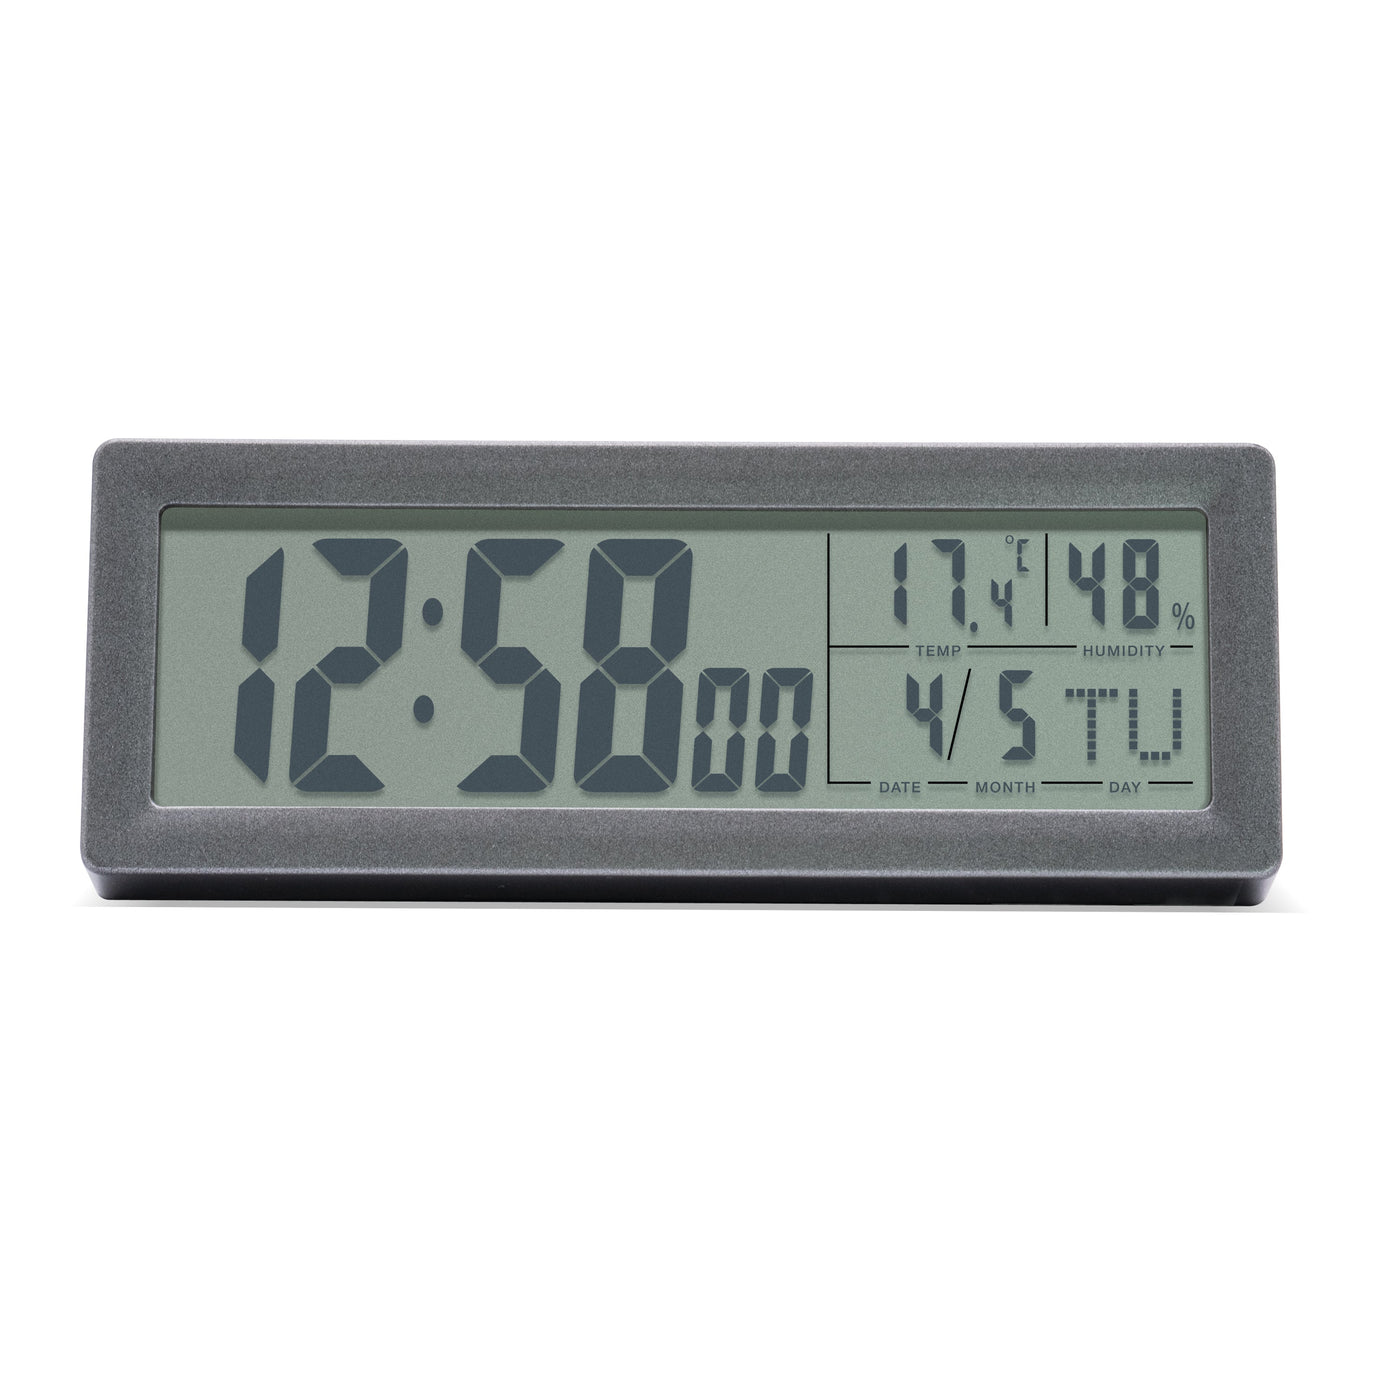 Acctim Karminski Digital Alarm Clock Graphite Grey - timeframedclocks